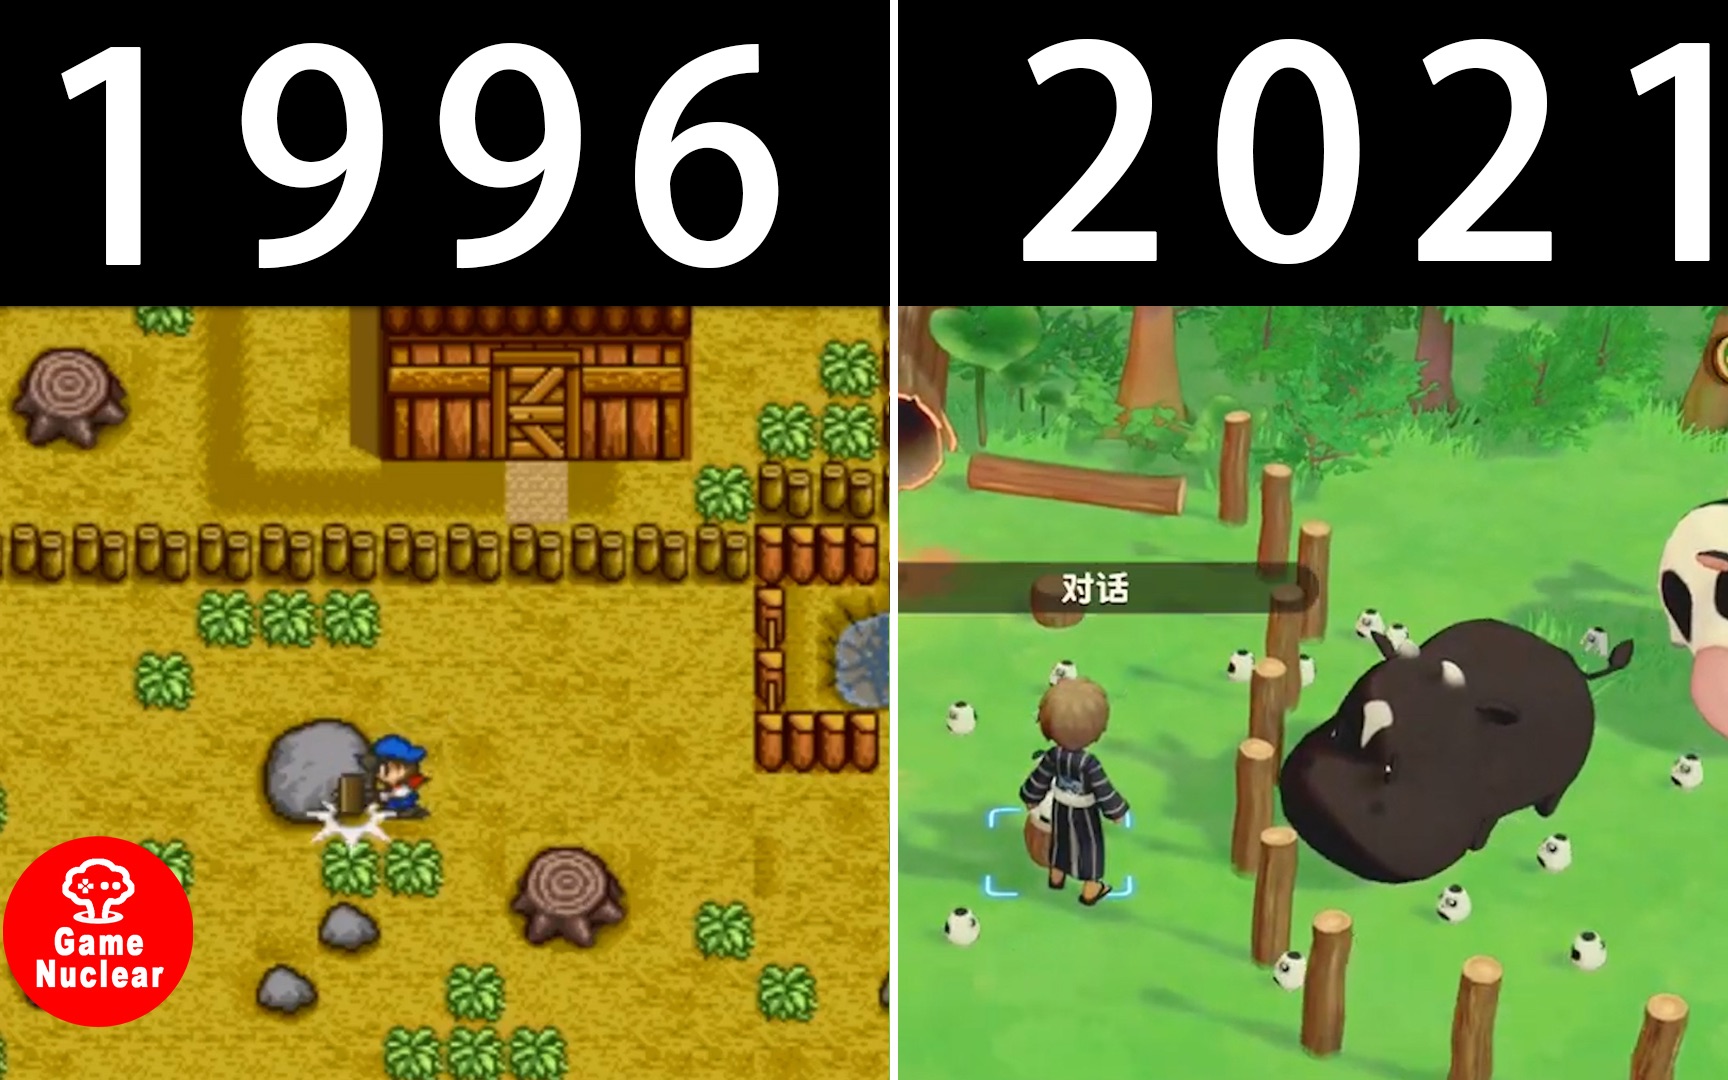 牧场物语游戏进化史（Evolution of Harvest Moon）（1996-2021）